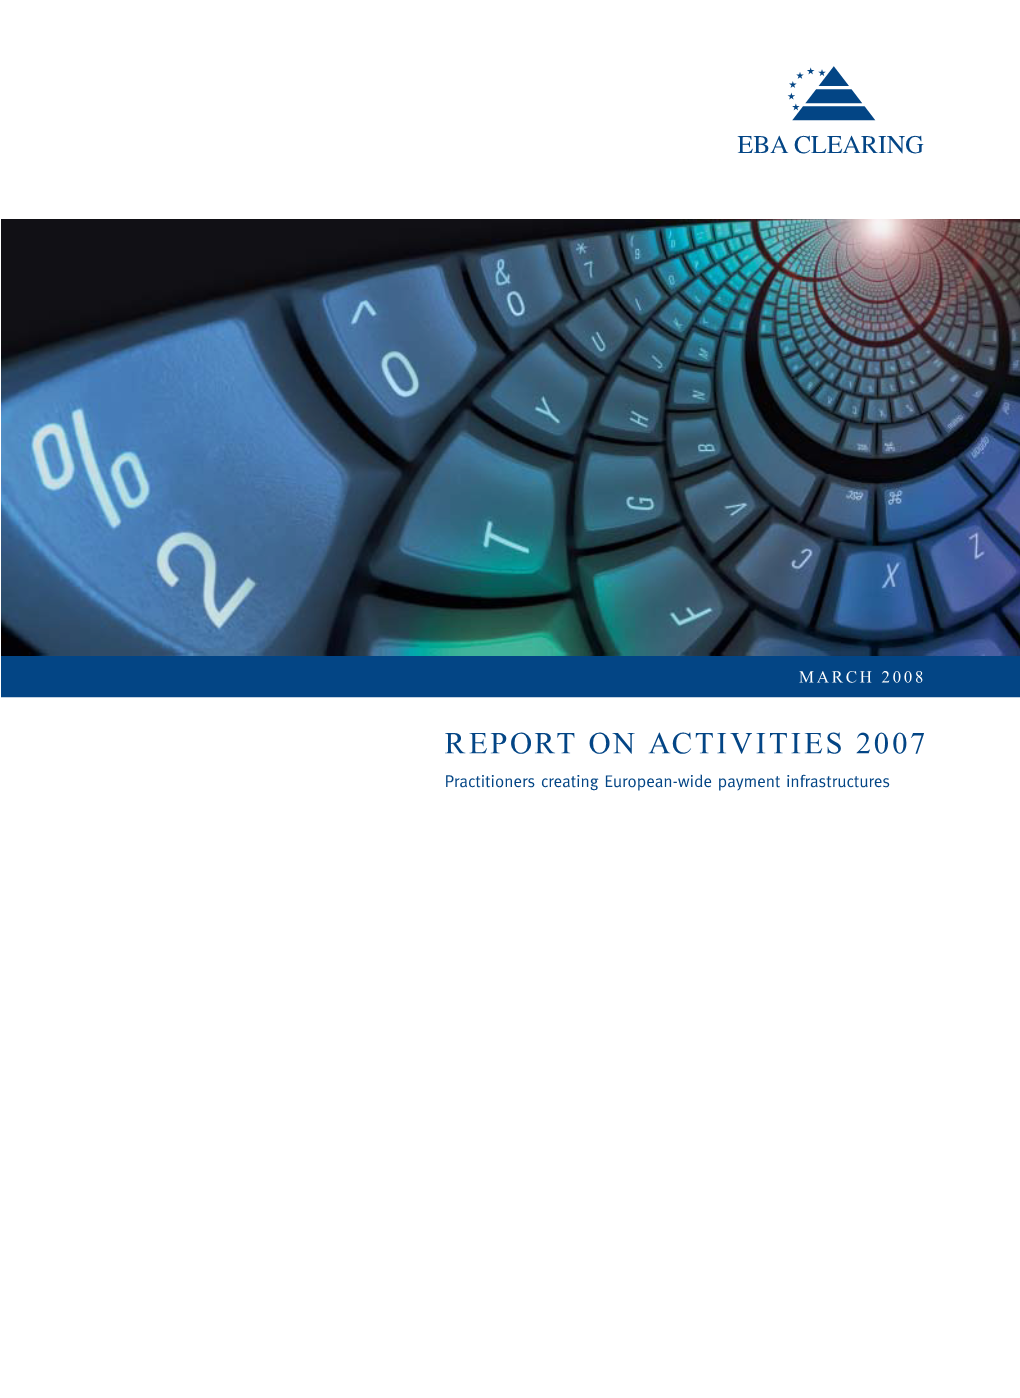 REPORT on ACTIVITIES 2007 Practitioners Creating European-Wide Payment Infrastructures